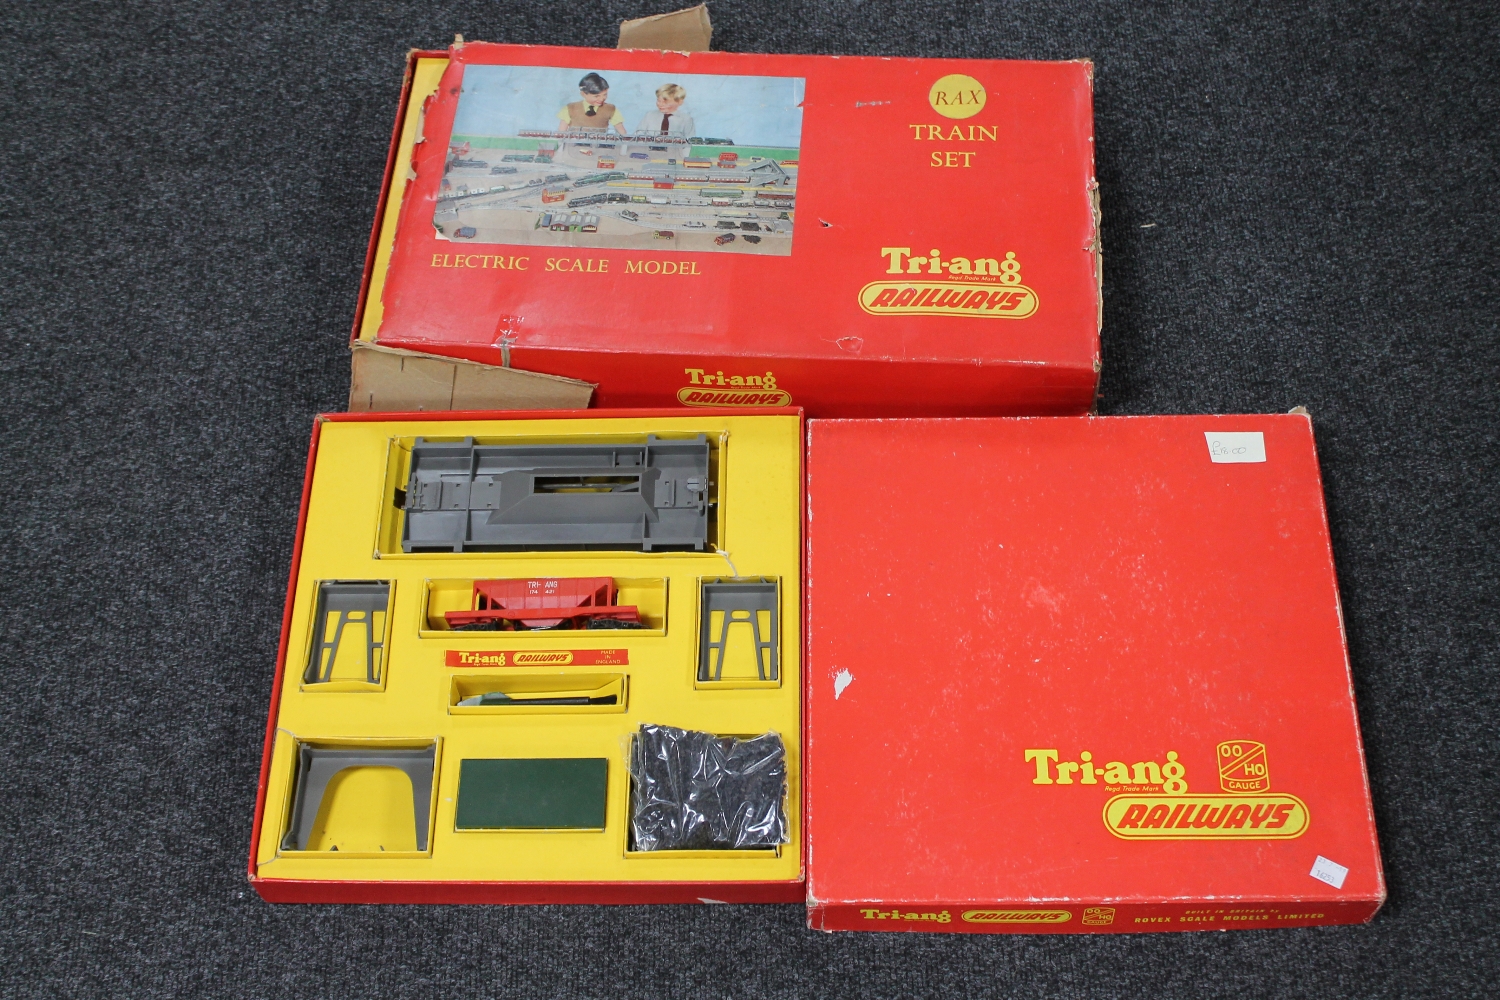 A Tri-ang Railways RAX train set and a boxed Tri-ang Railways Rovex scale model set